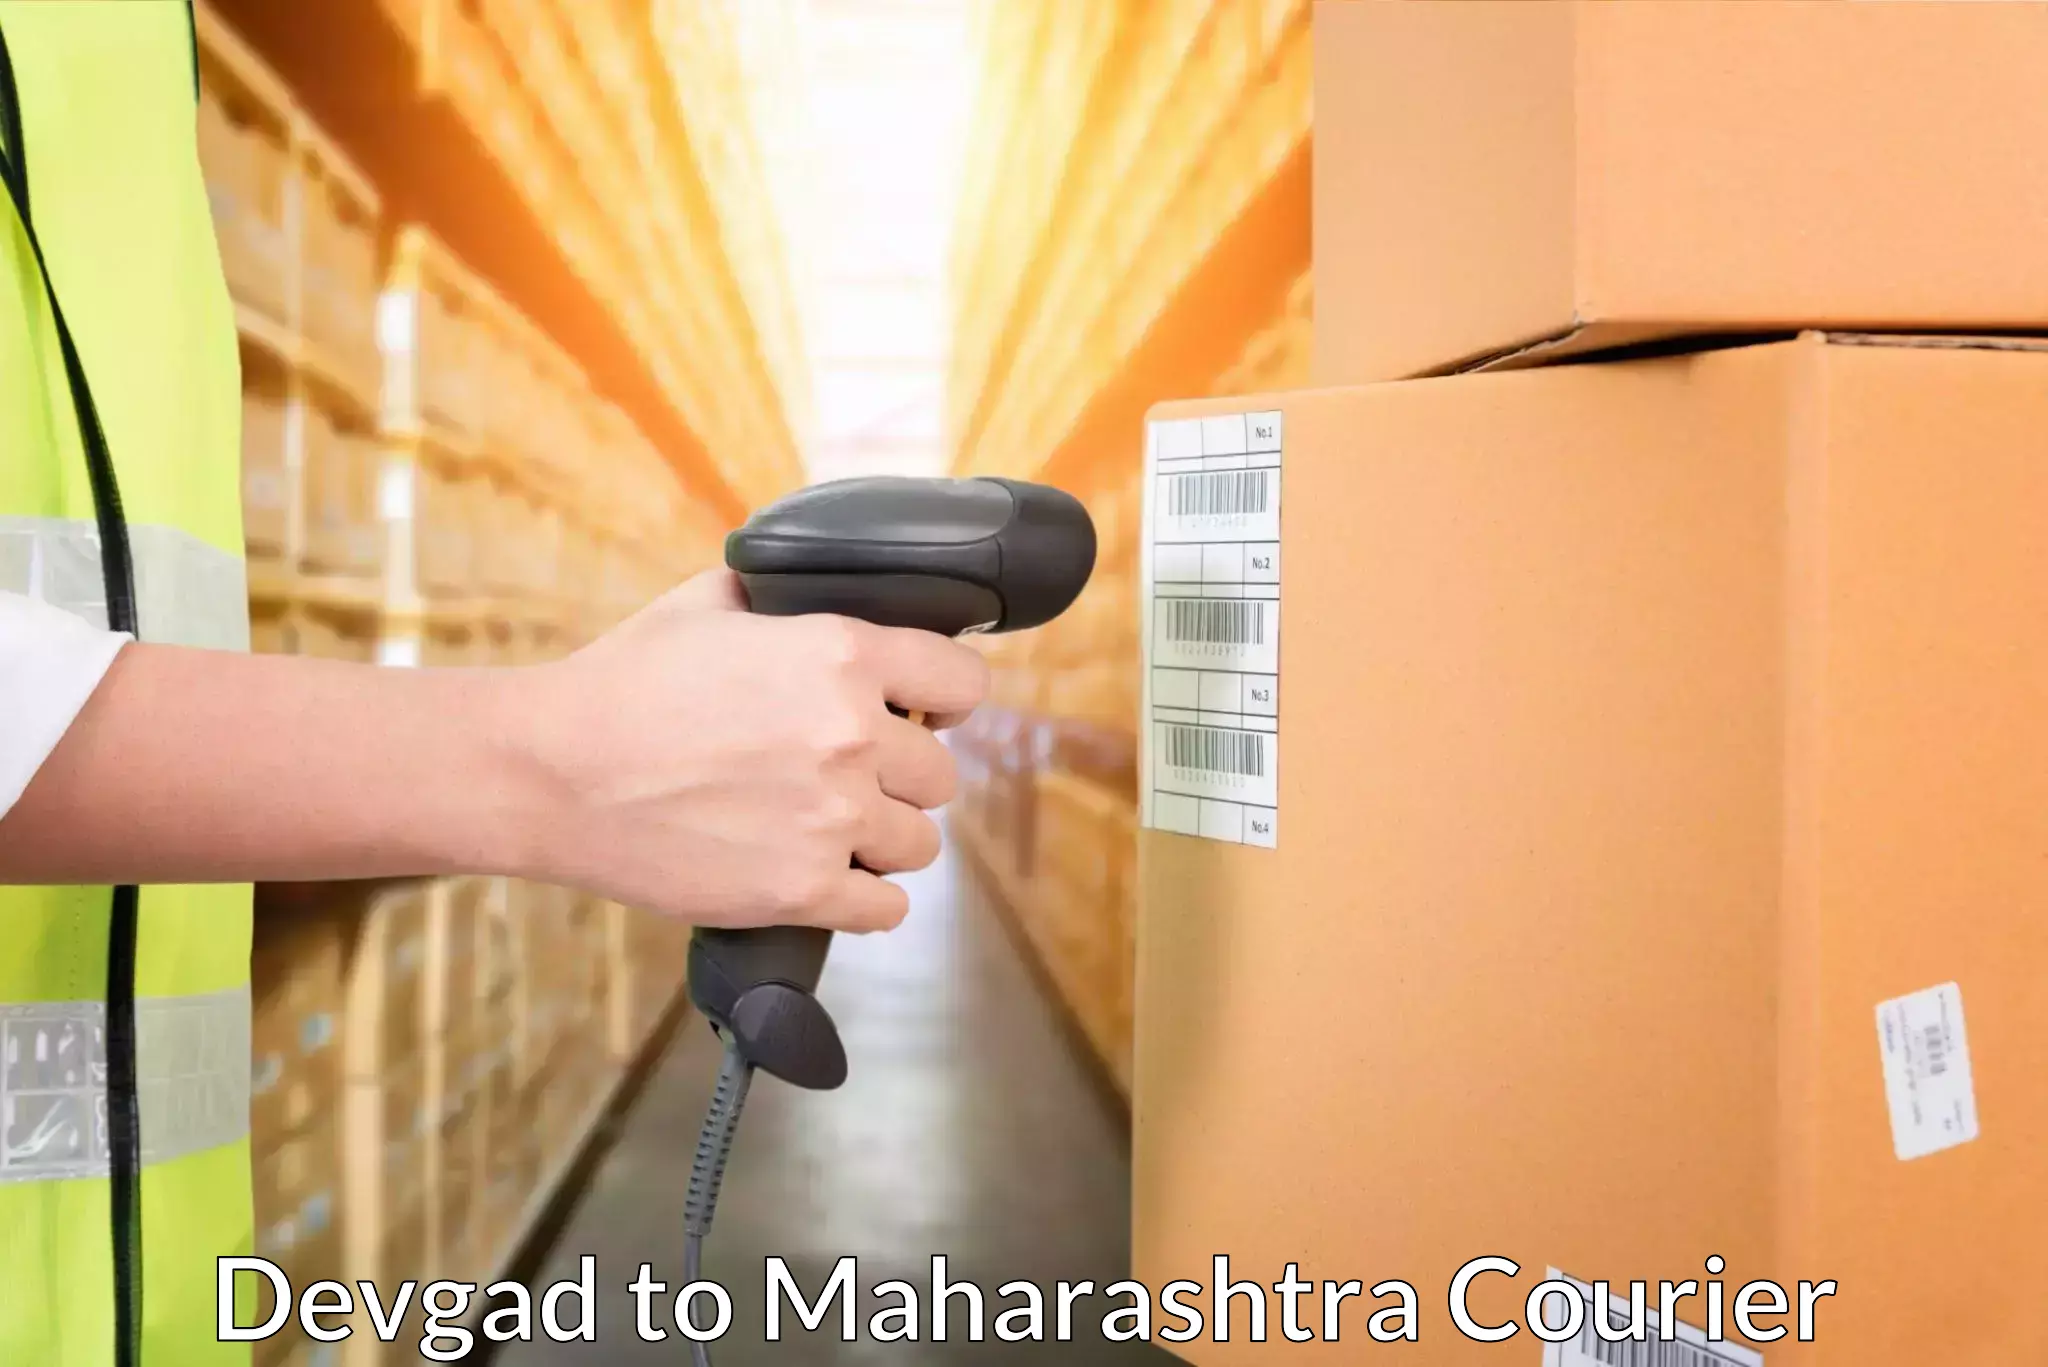 Seamless shipping experience Devgad to Maharashtra